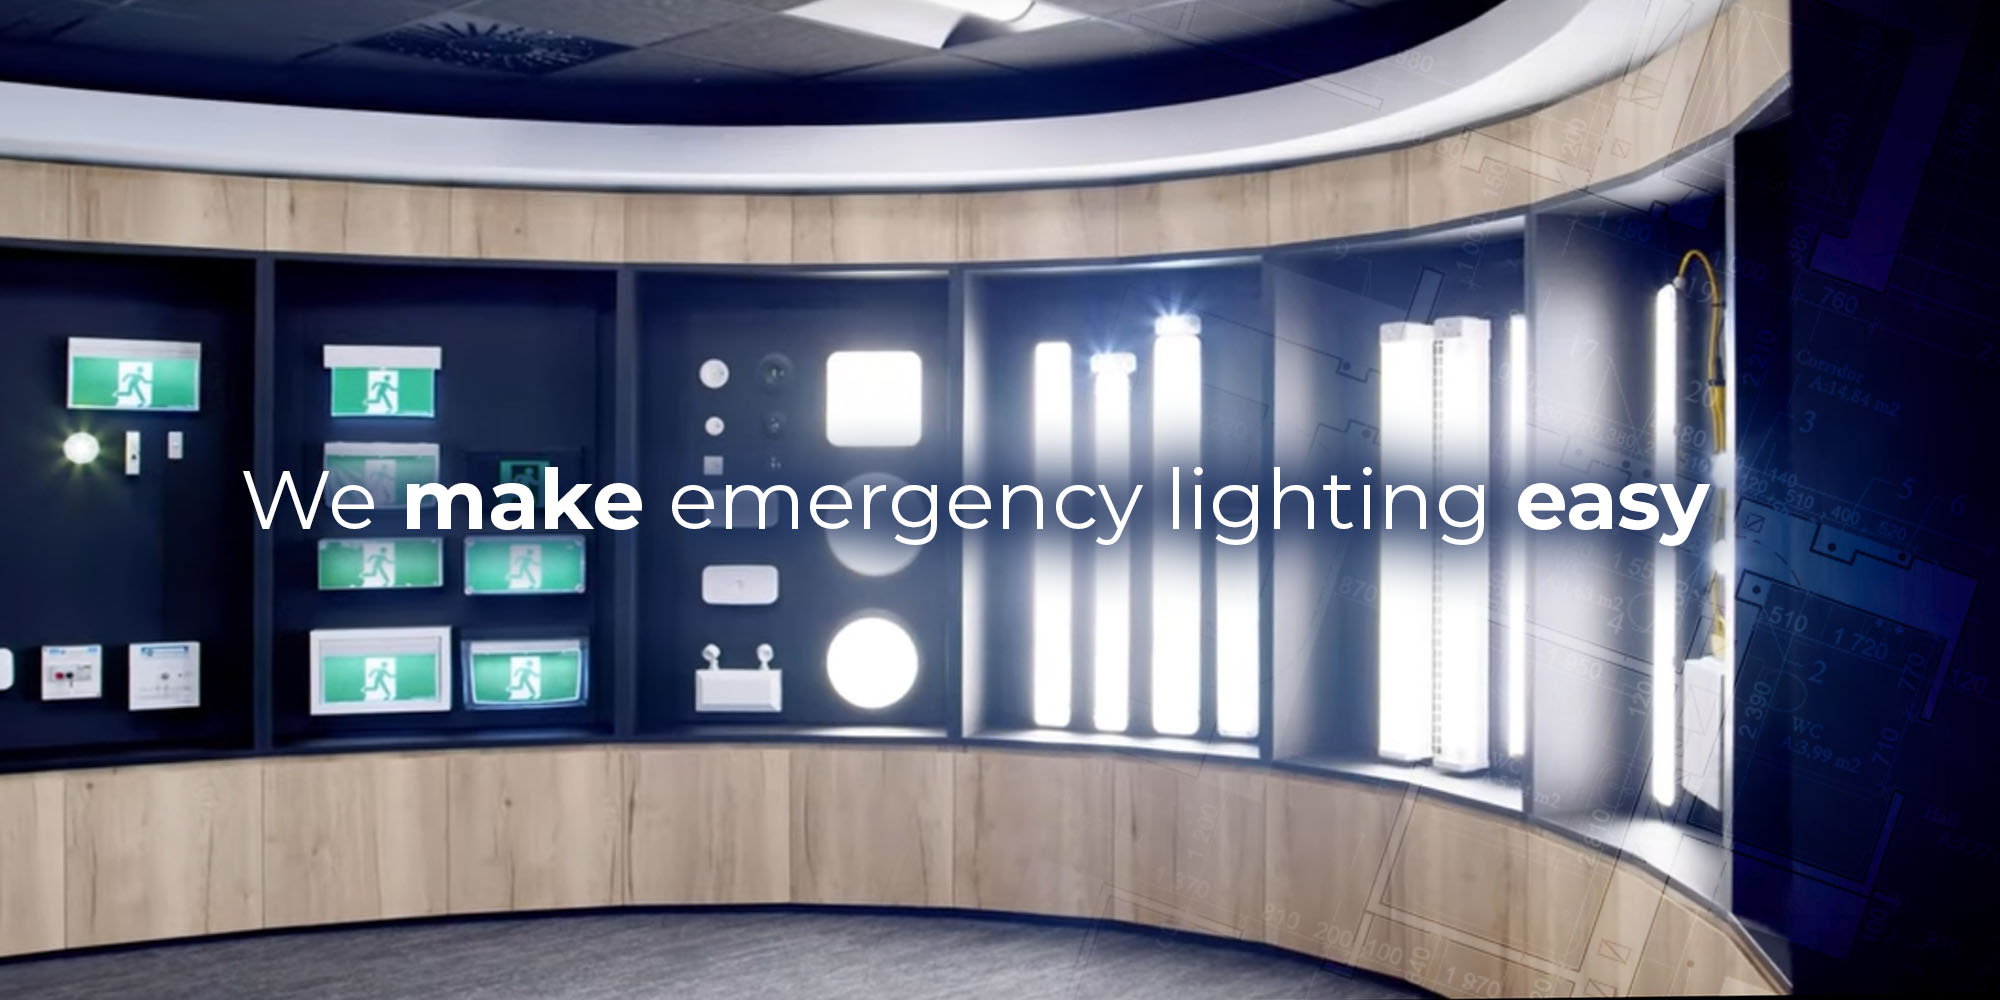 We make emergency lighting easy